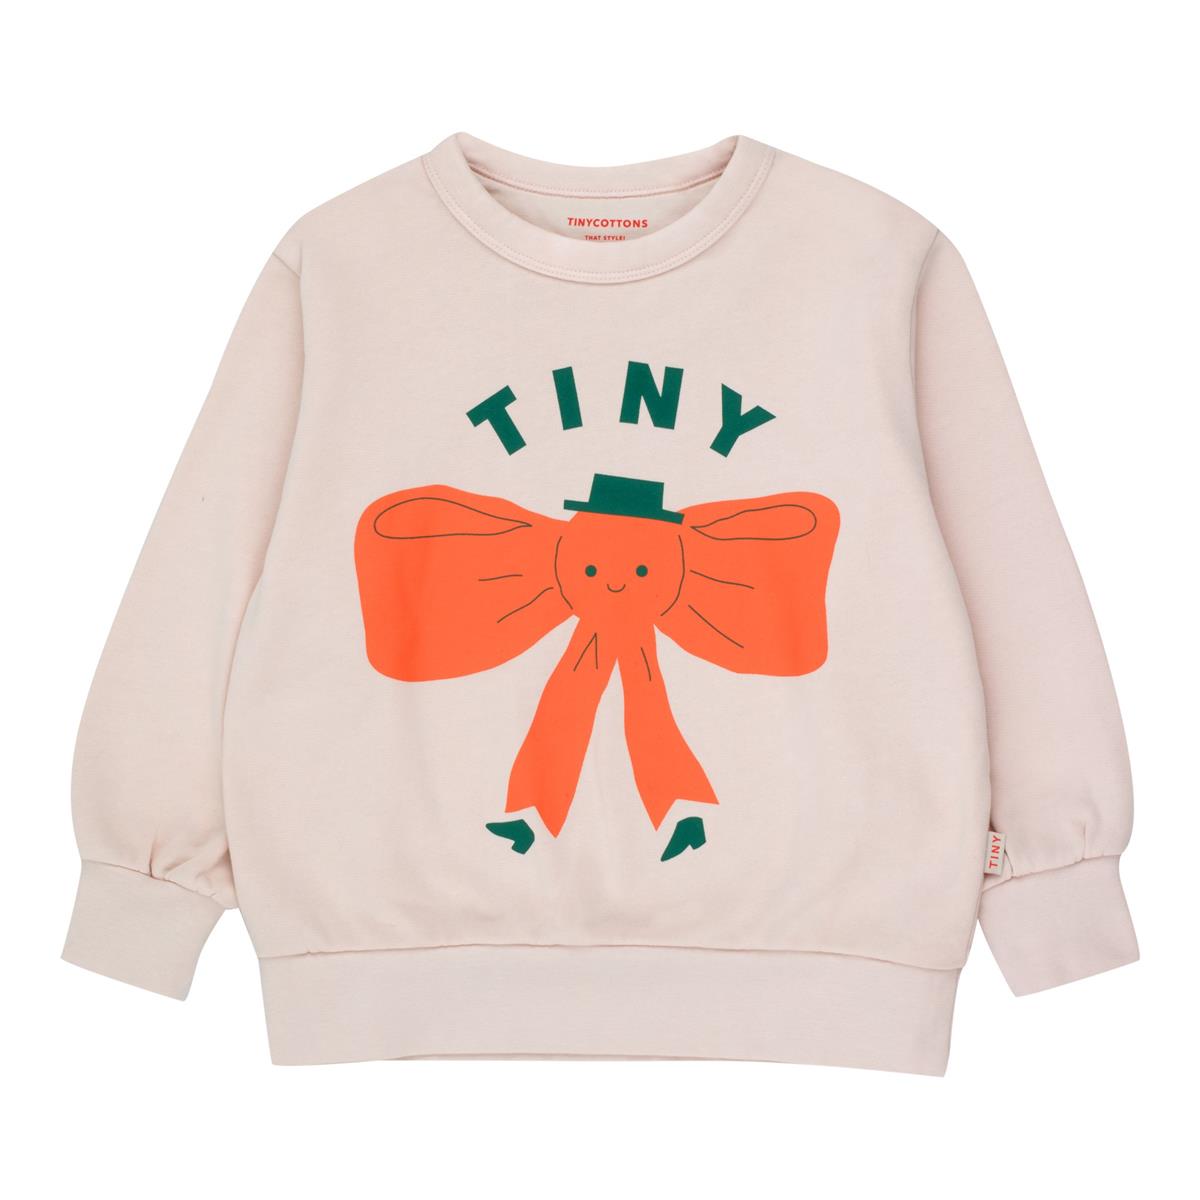 TINYCOTTONS - TINY BOW SWEATSHIRT - soft pink